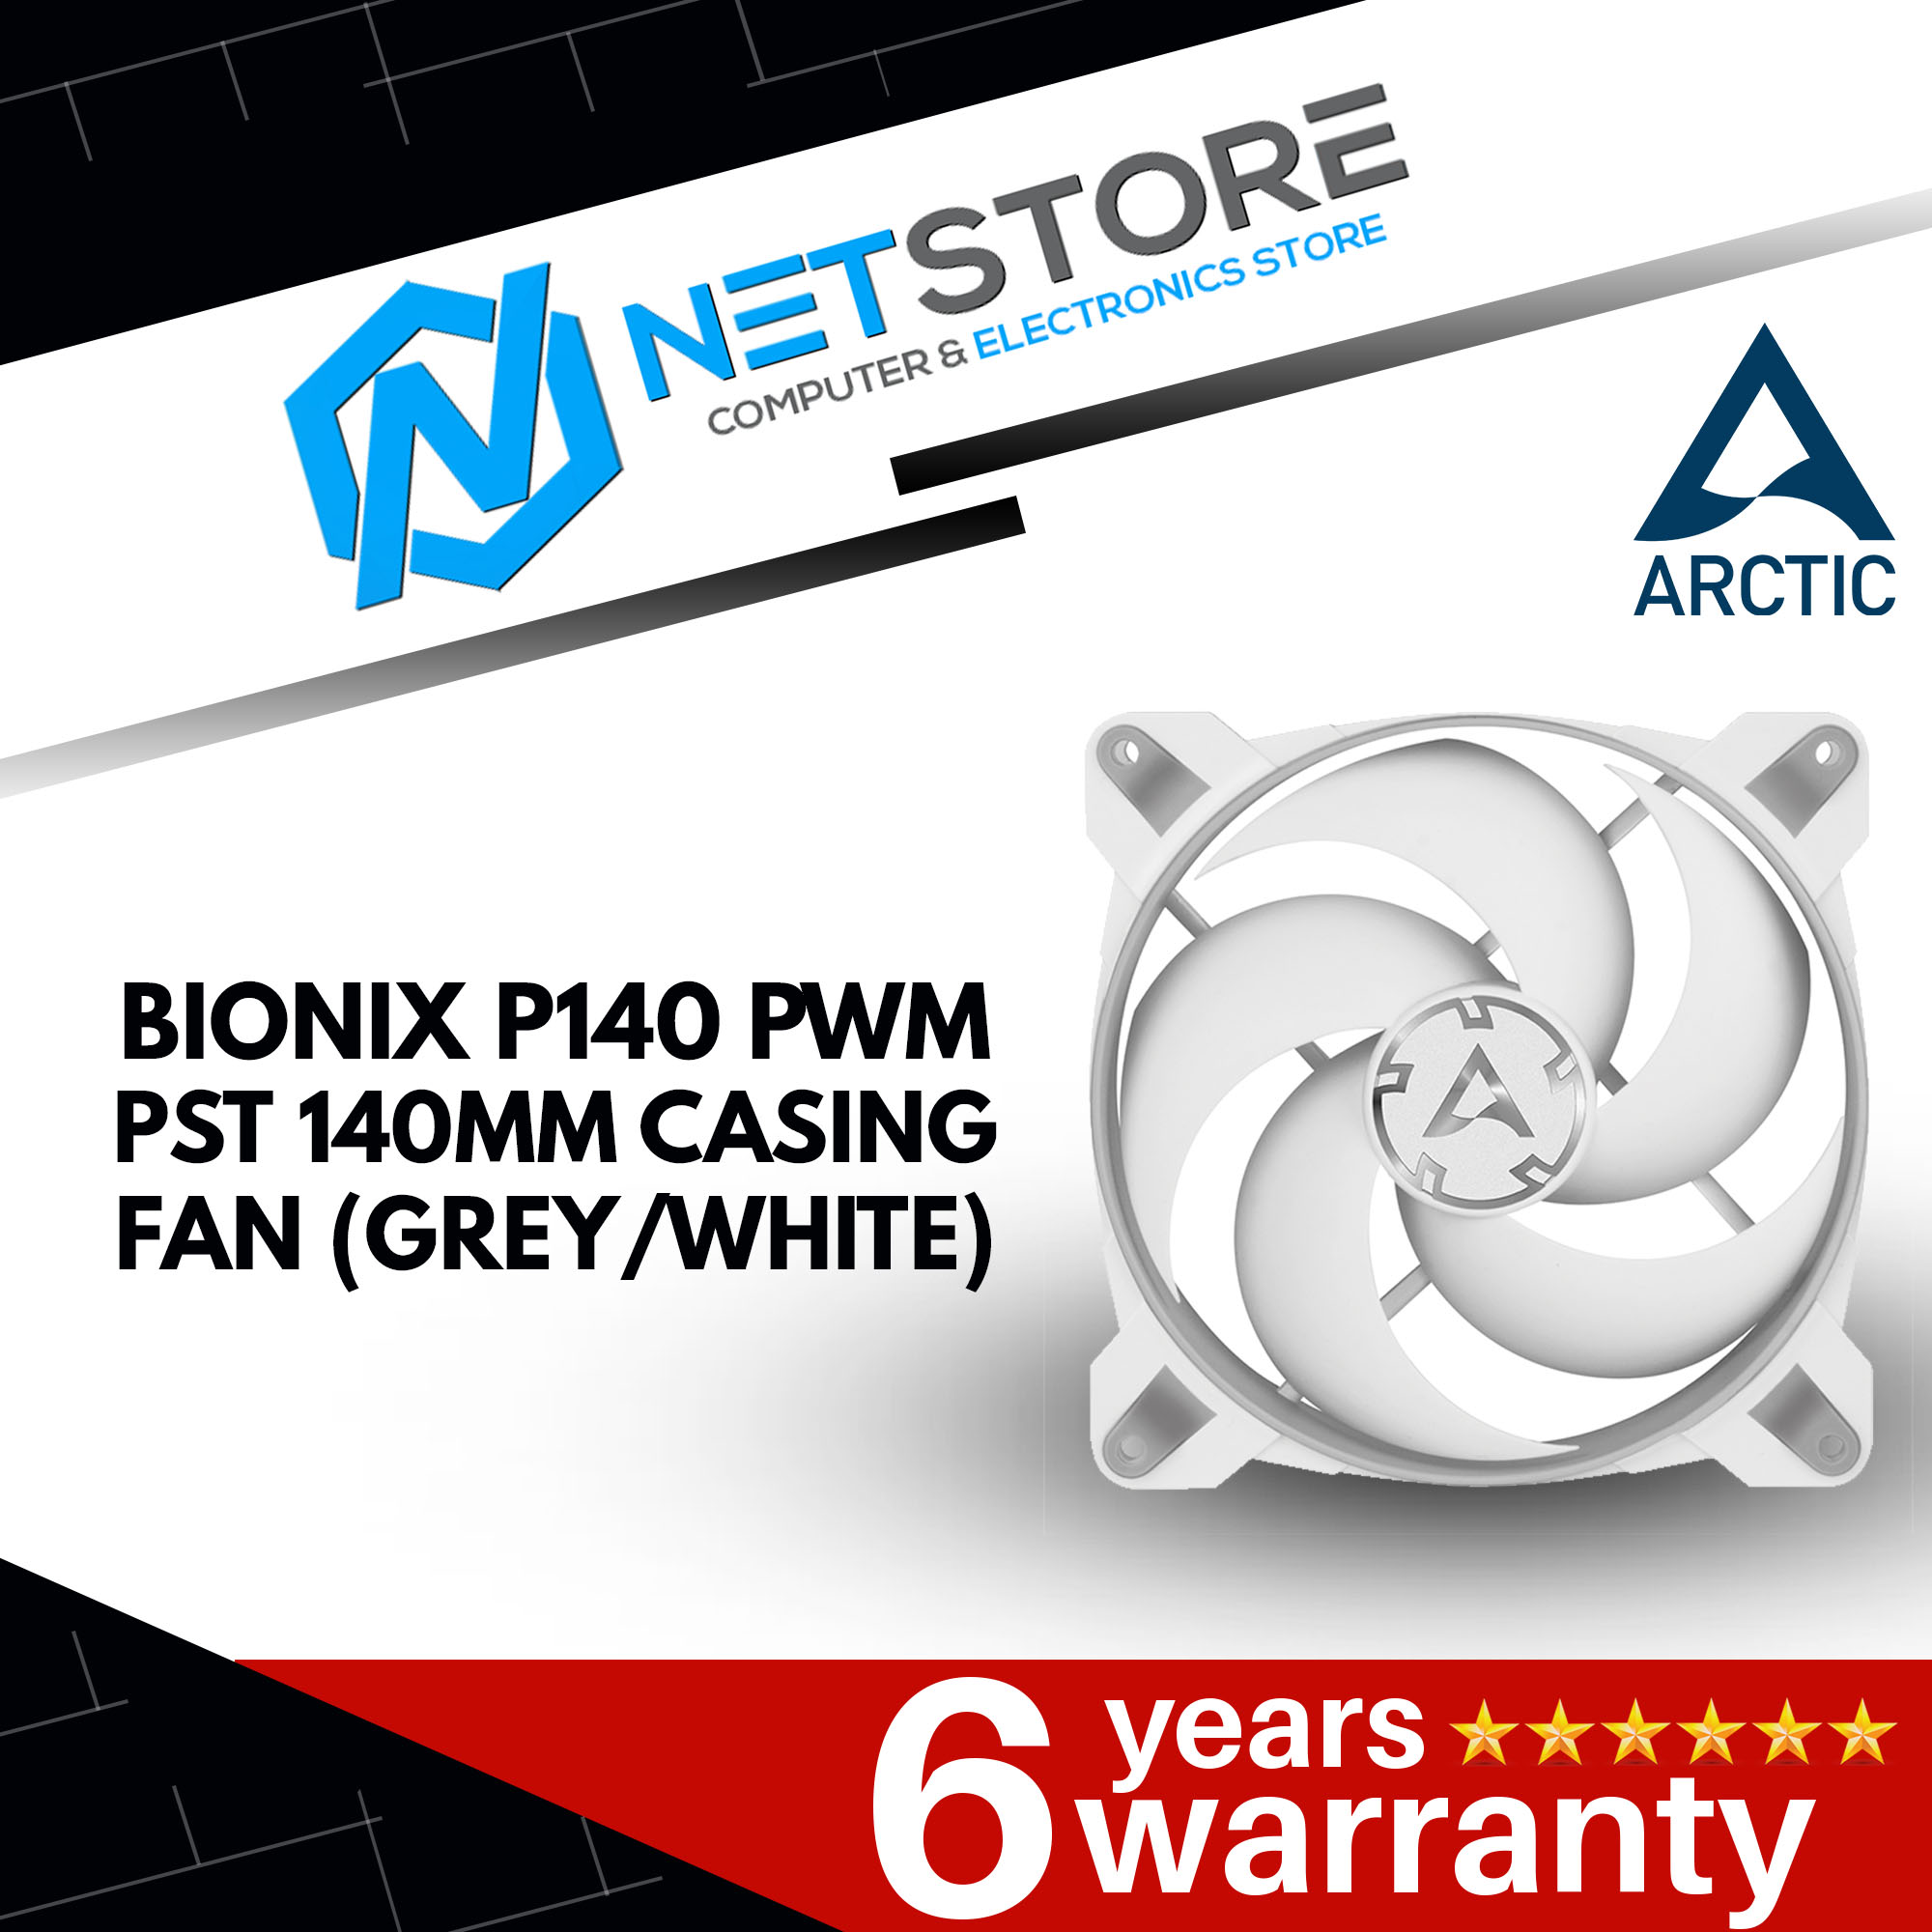 ARCTIC BIONIX P140 PWM PST 140MM CASING FAN (GREY/WHITE) - ACFAN00160A